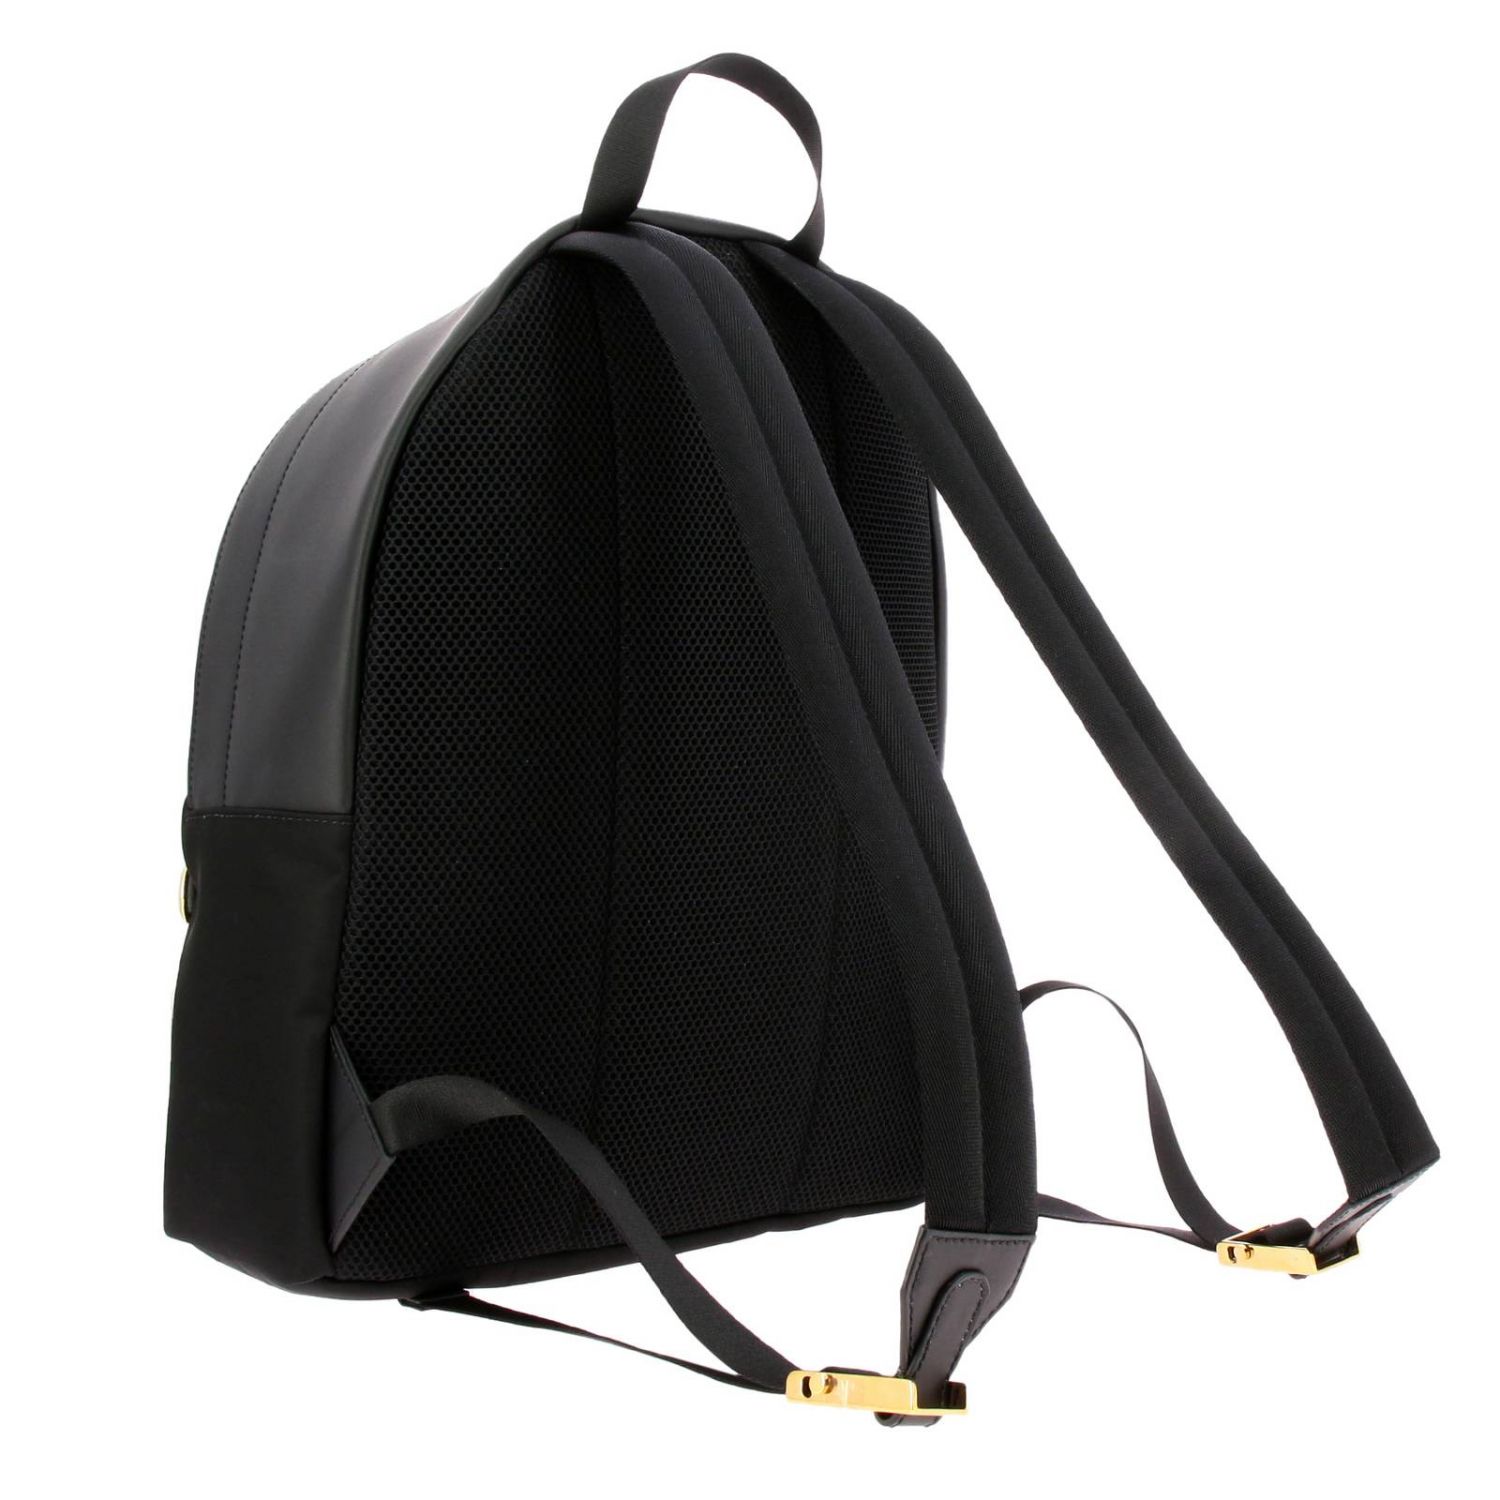 FENDI: Bags men | Backpack Fendi Men Black | Backpack Fendi 7VZ042 A6FL ...